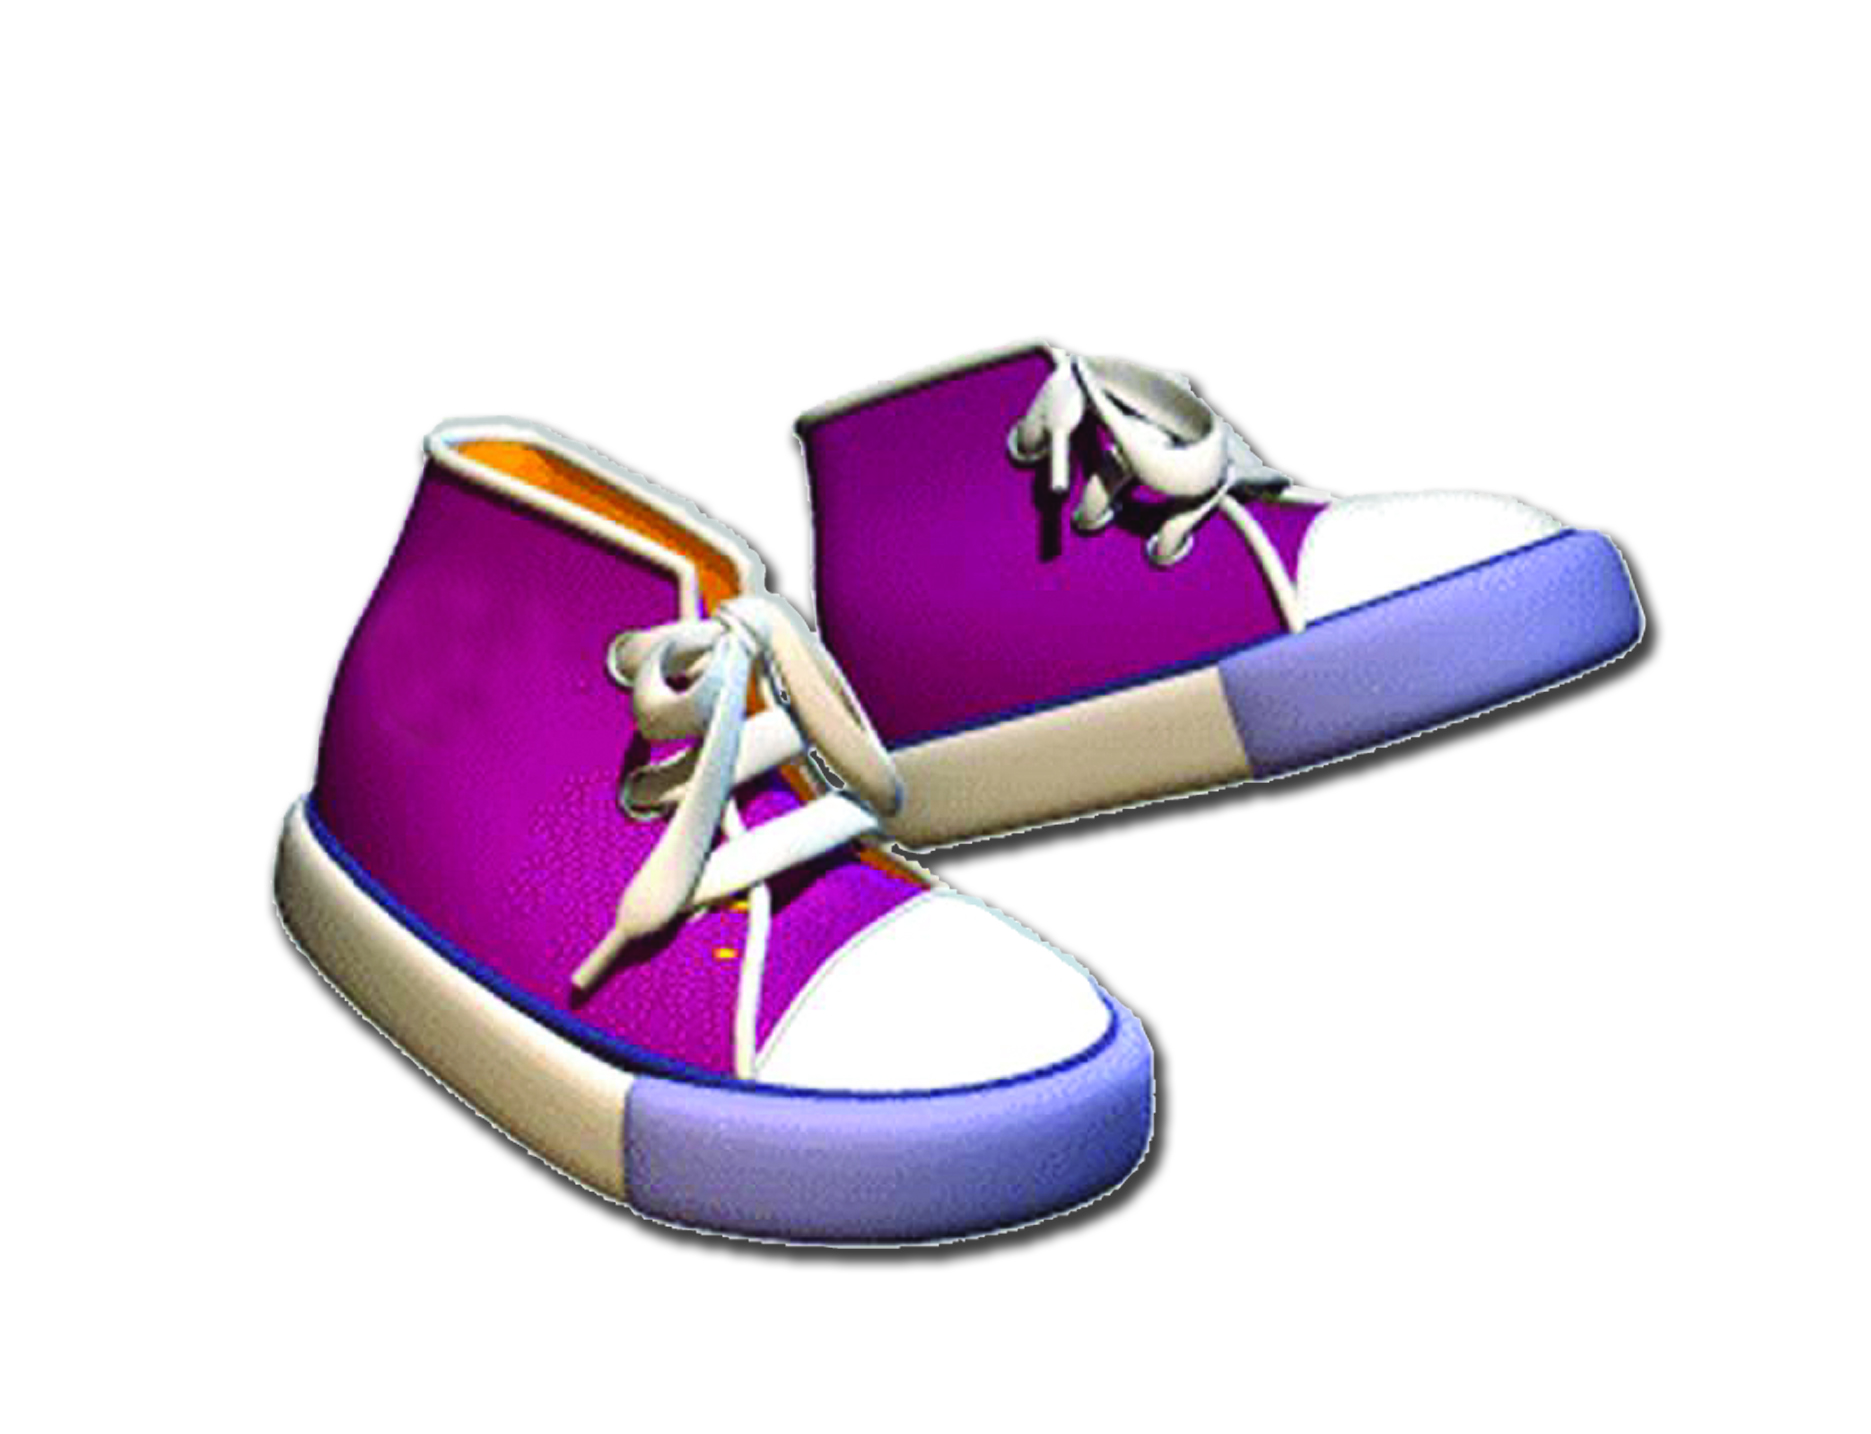 Cartoon Sneakers Clip Art Sneakers Only Image   Vector